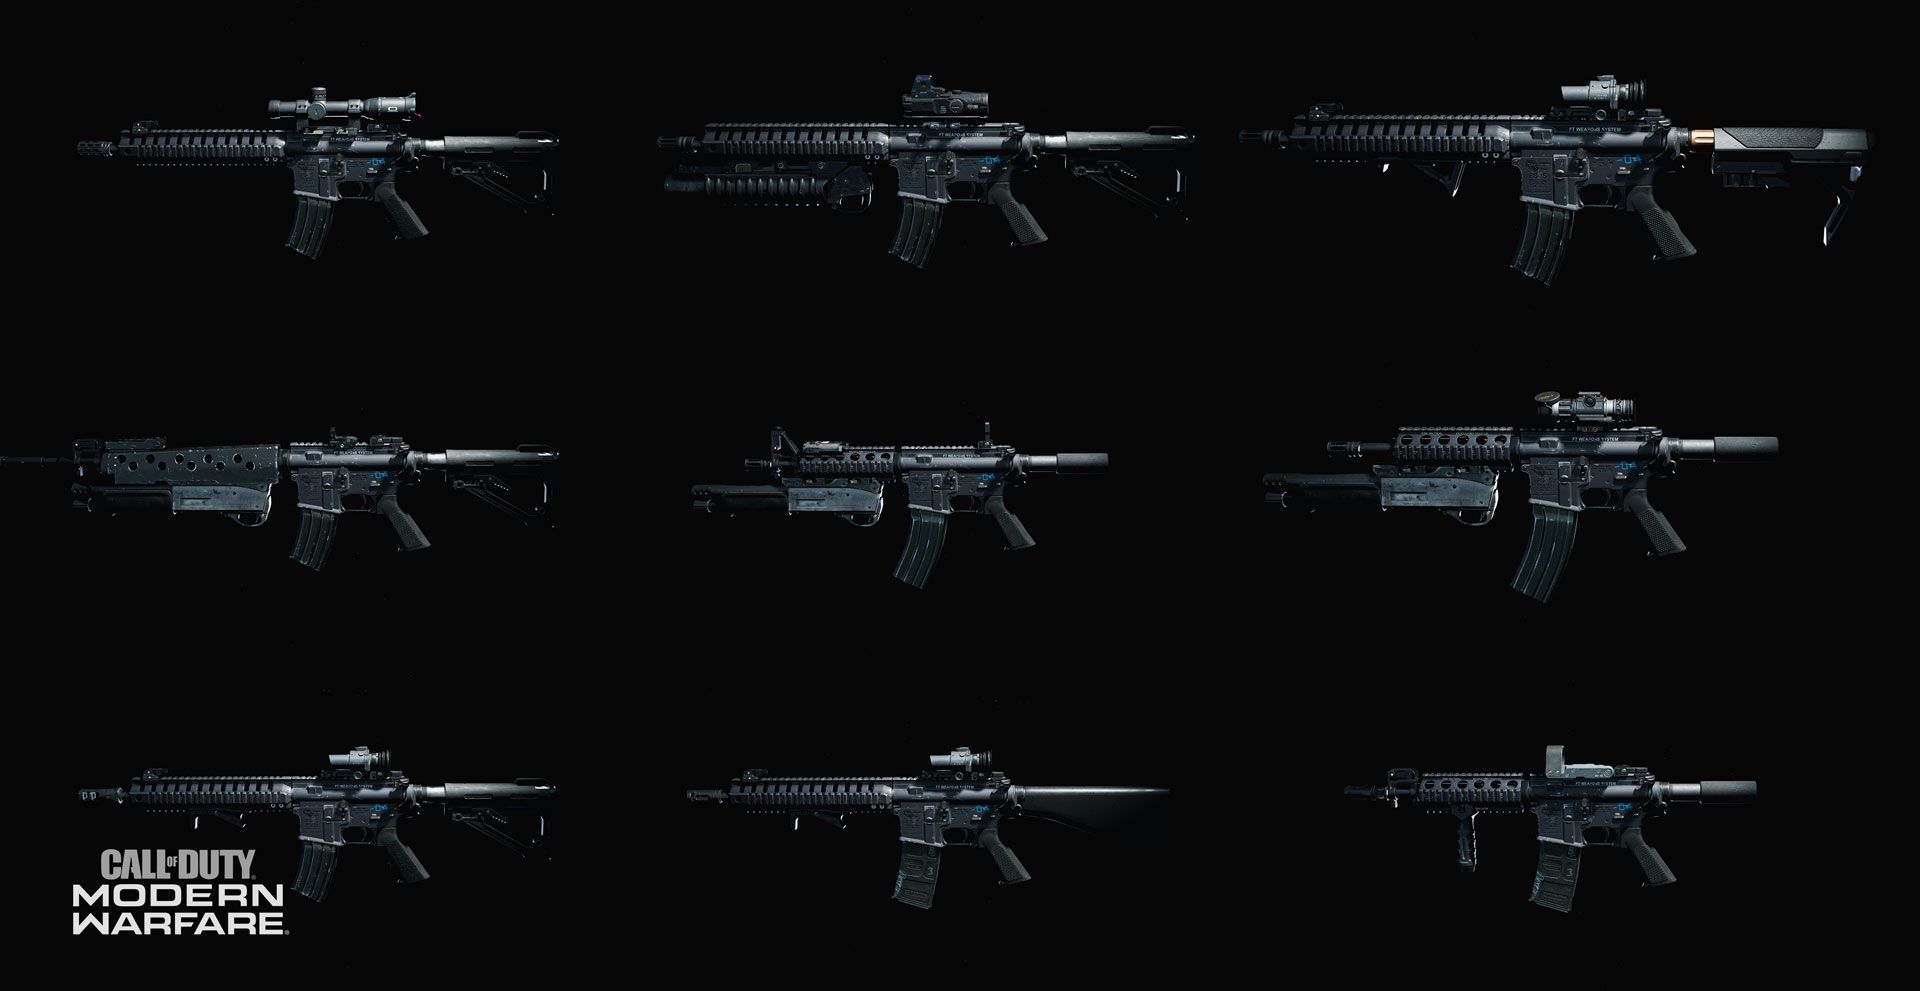 IV. Advantages of Assault Rifles in Modern Warfare